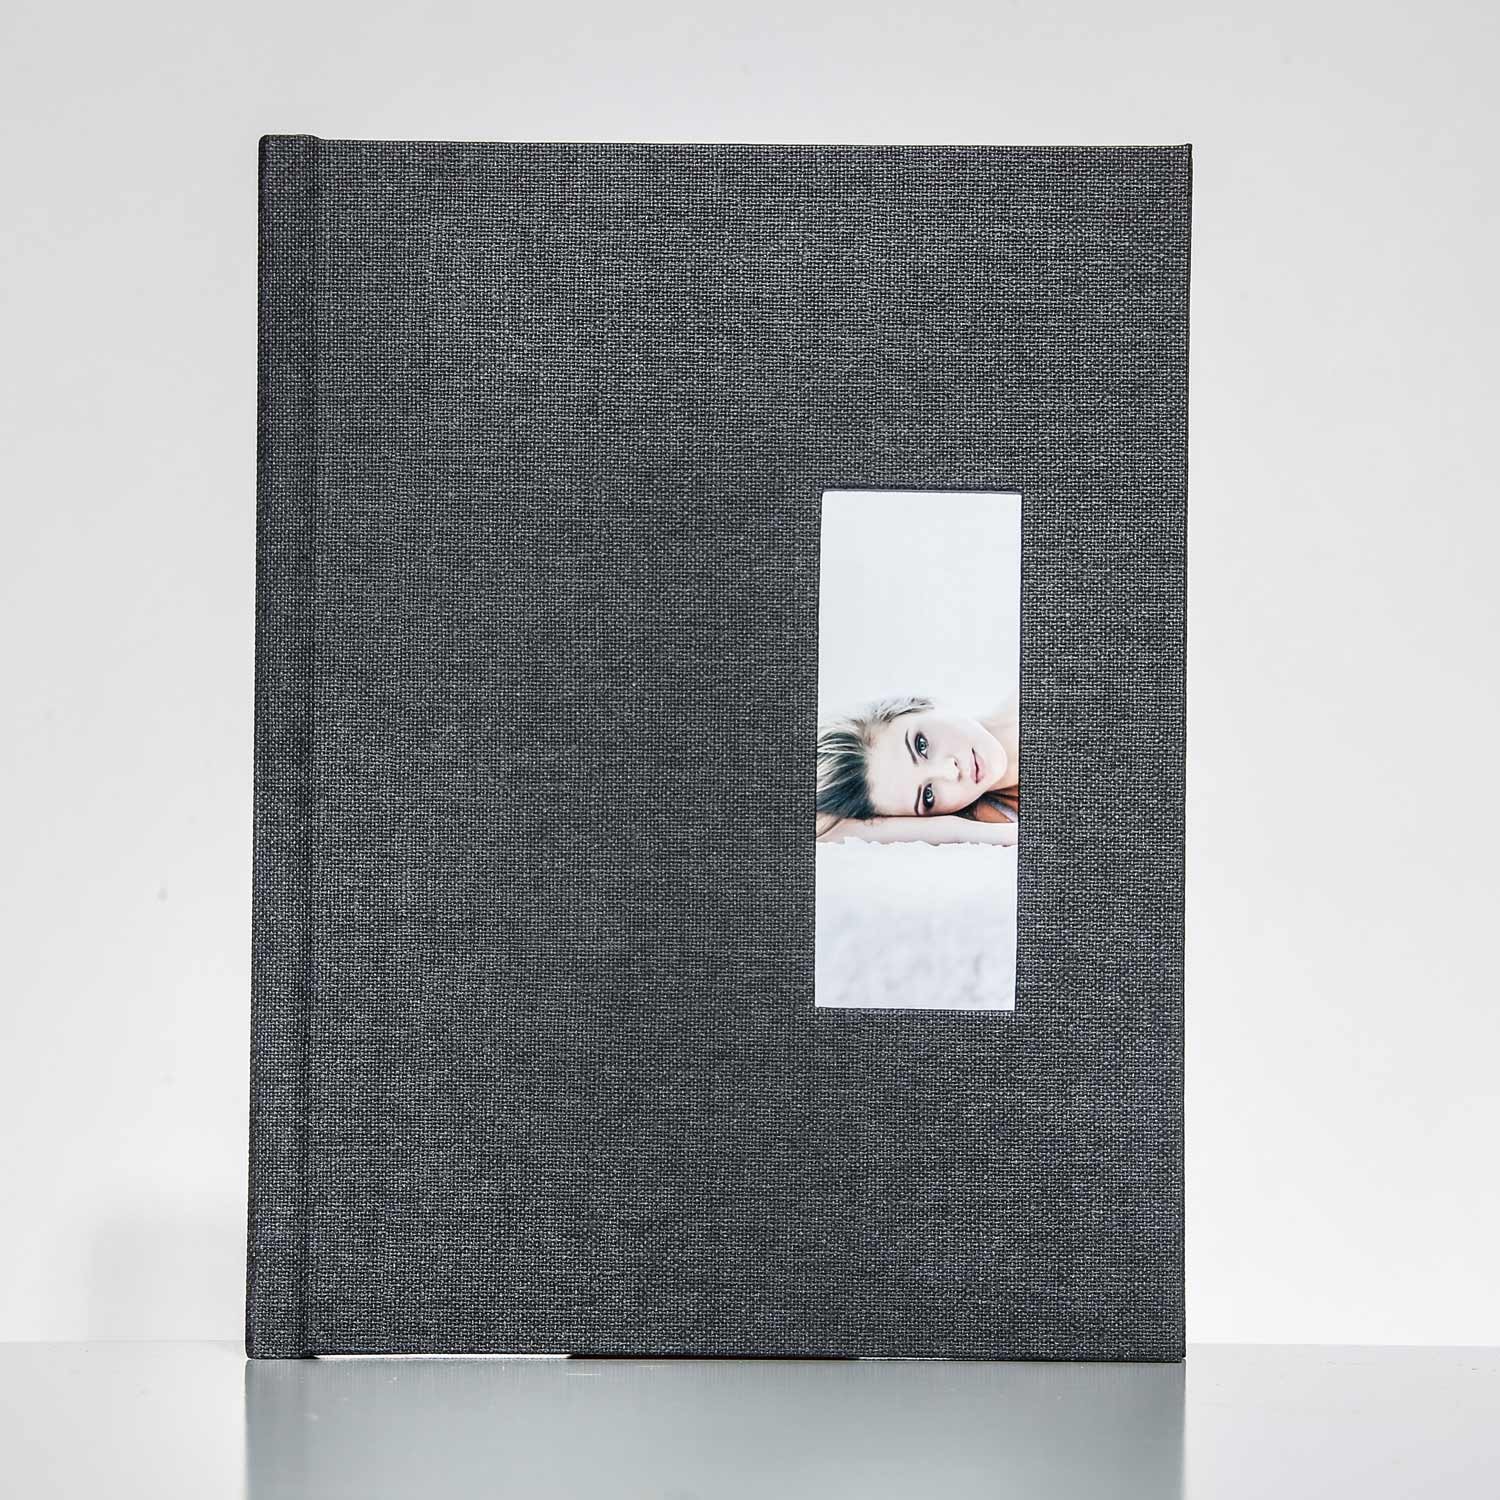 Silverbook 22,5x30cm with Portrait Window